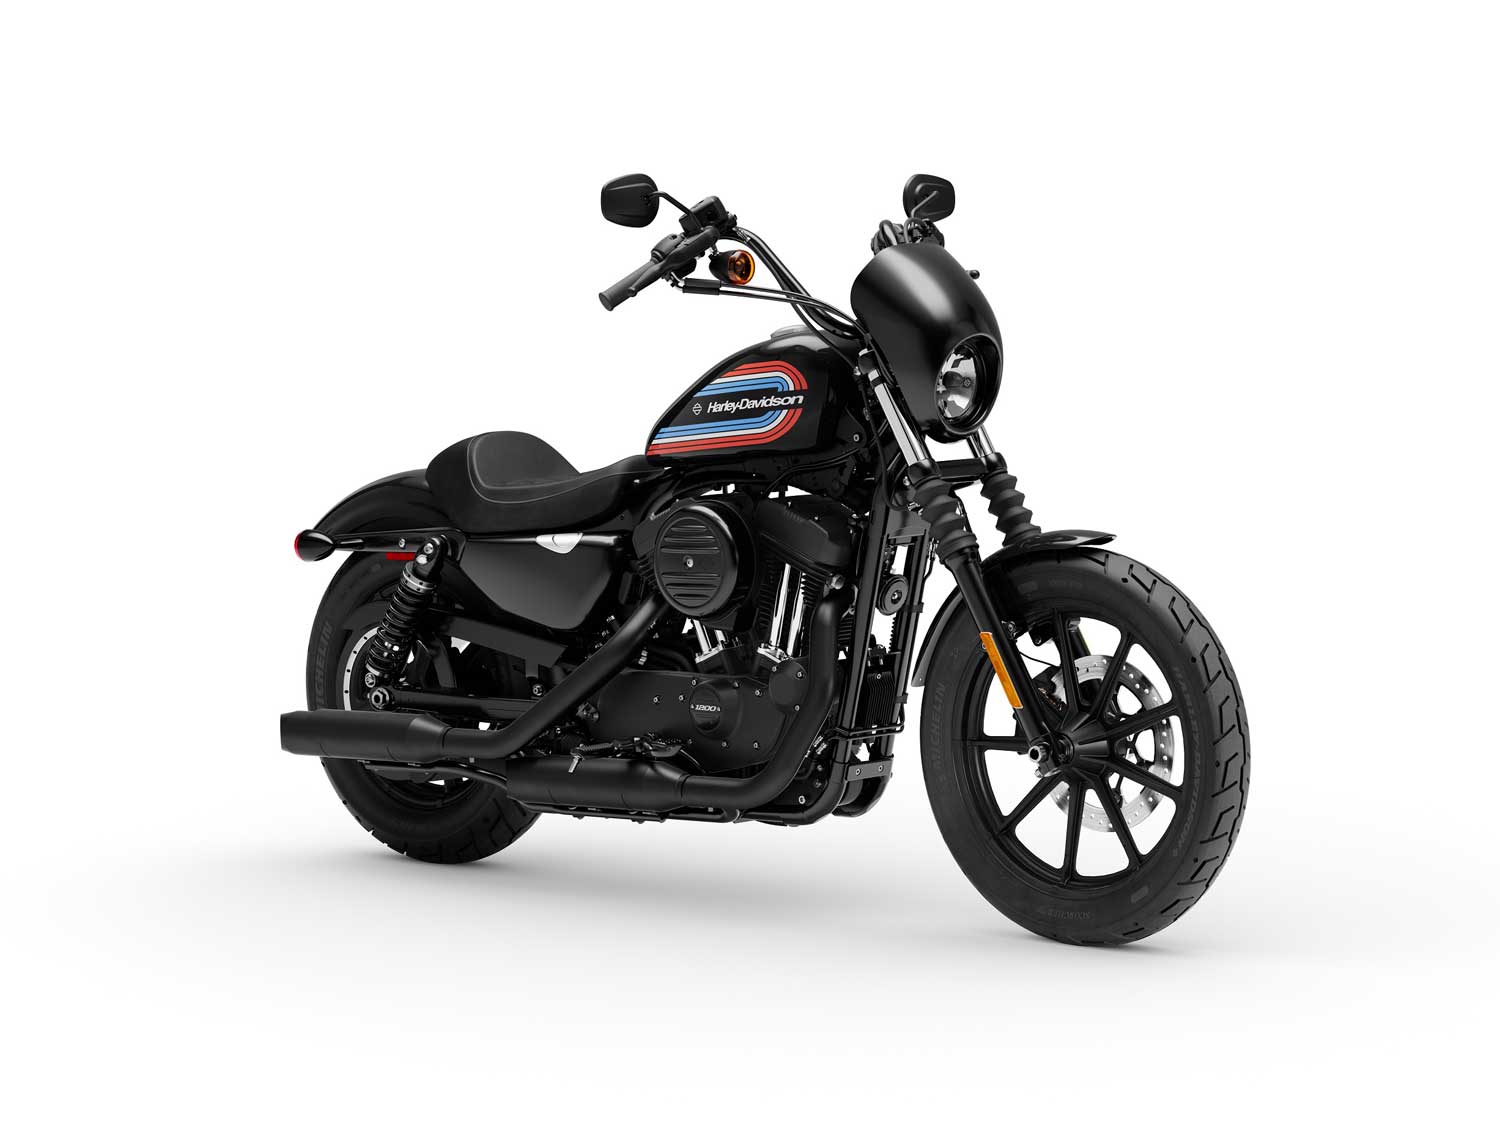 5 Things We'd Change On The Harley-Davidson Sportster 1200 Custom